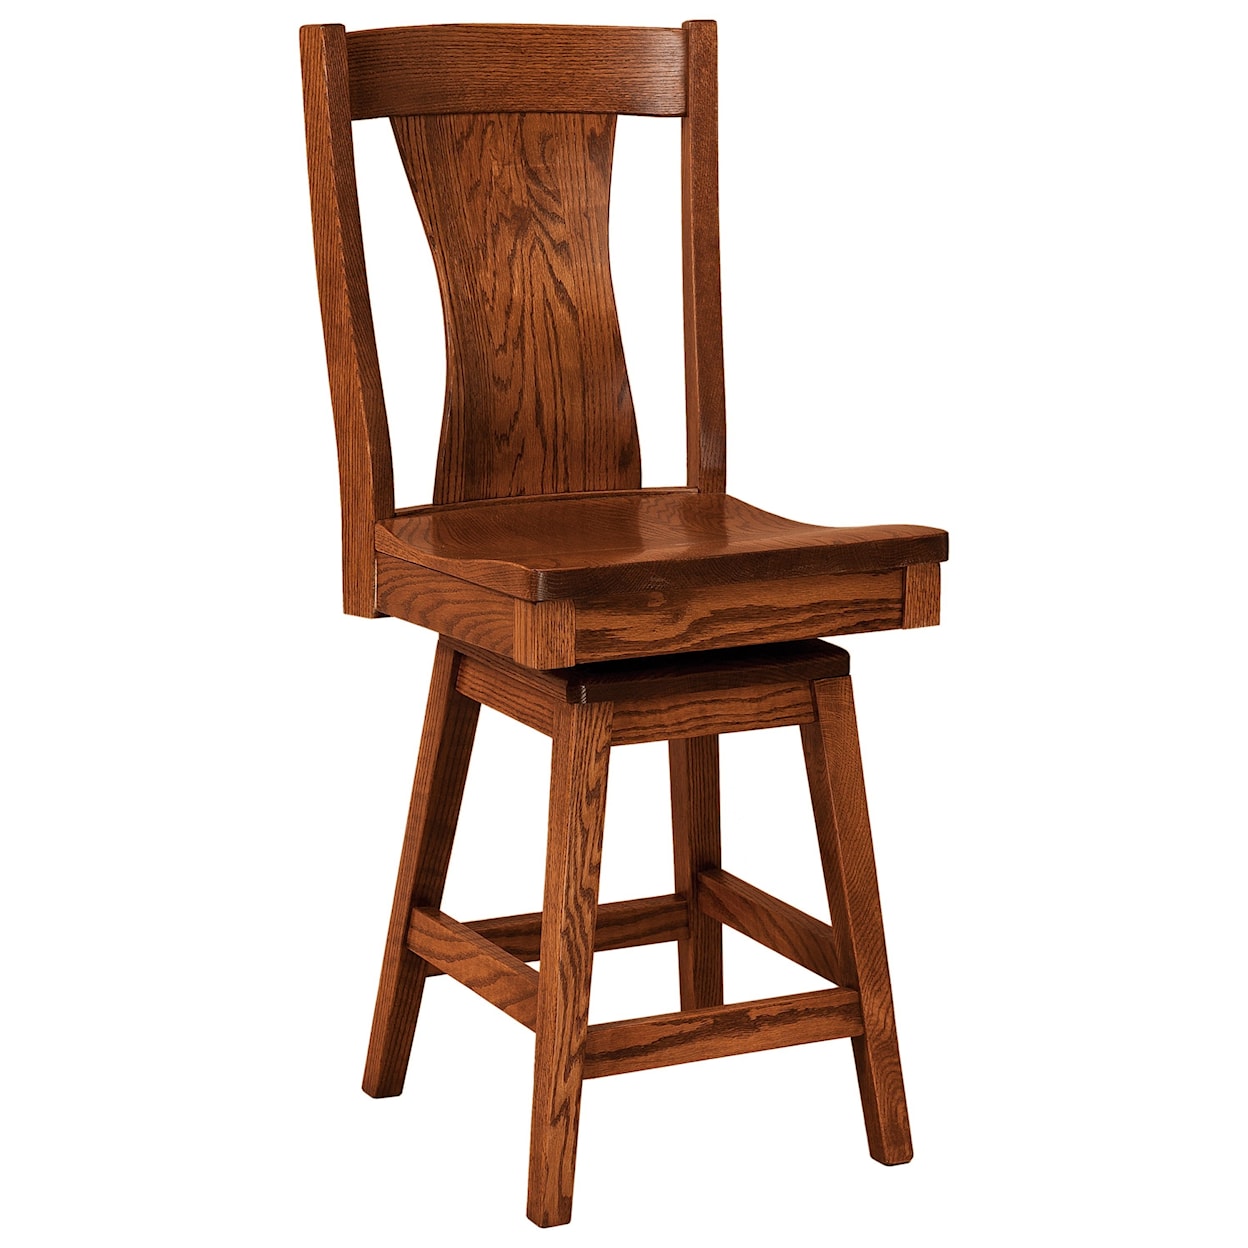 F&N Woodworking Westin Swivel Counter Height Stool - Wood Seat